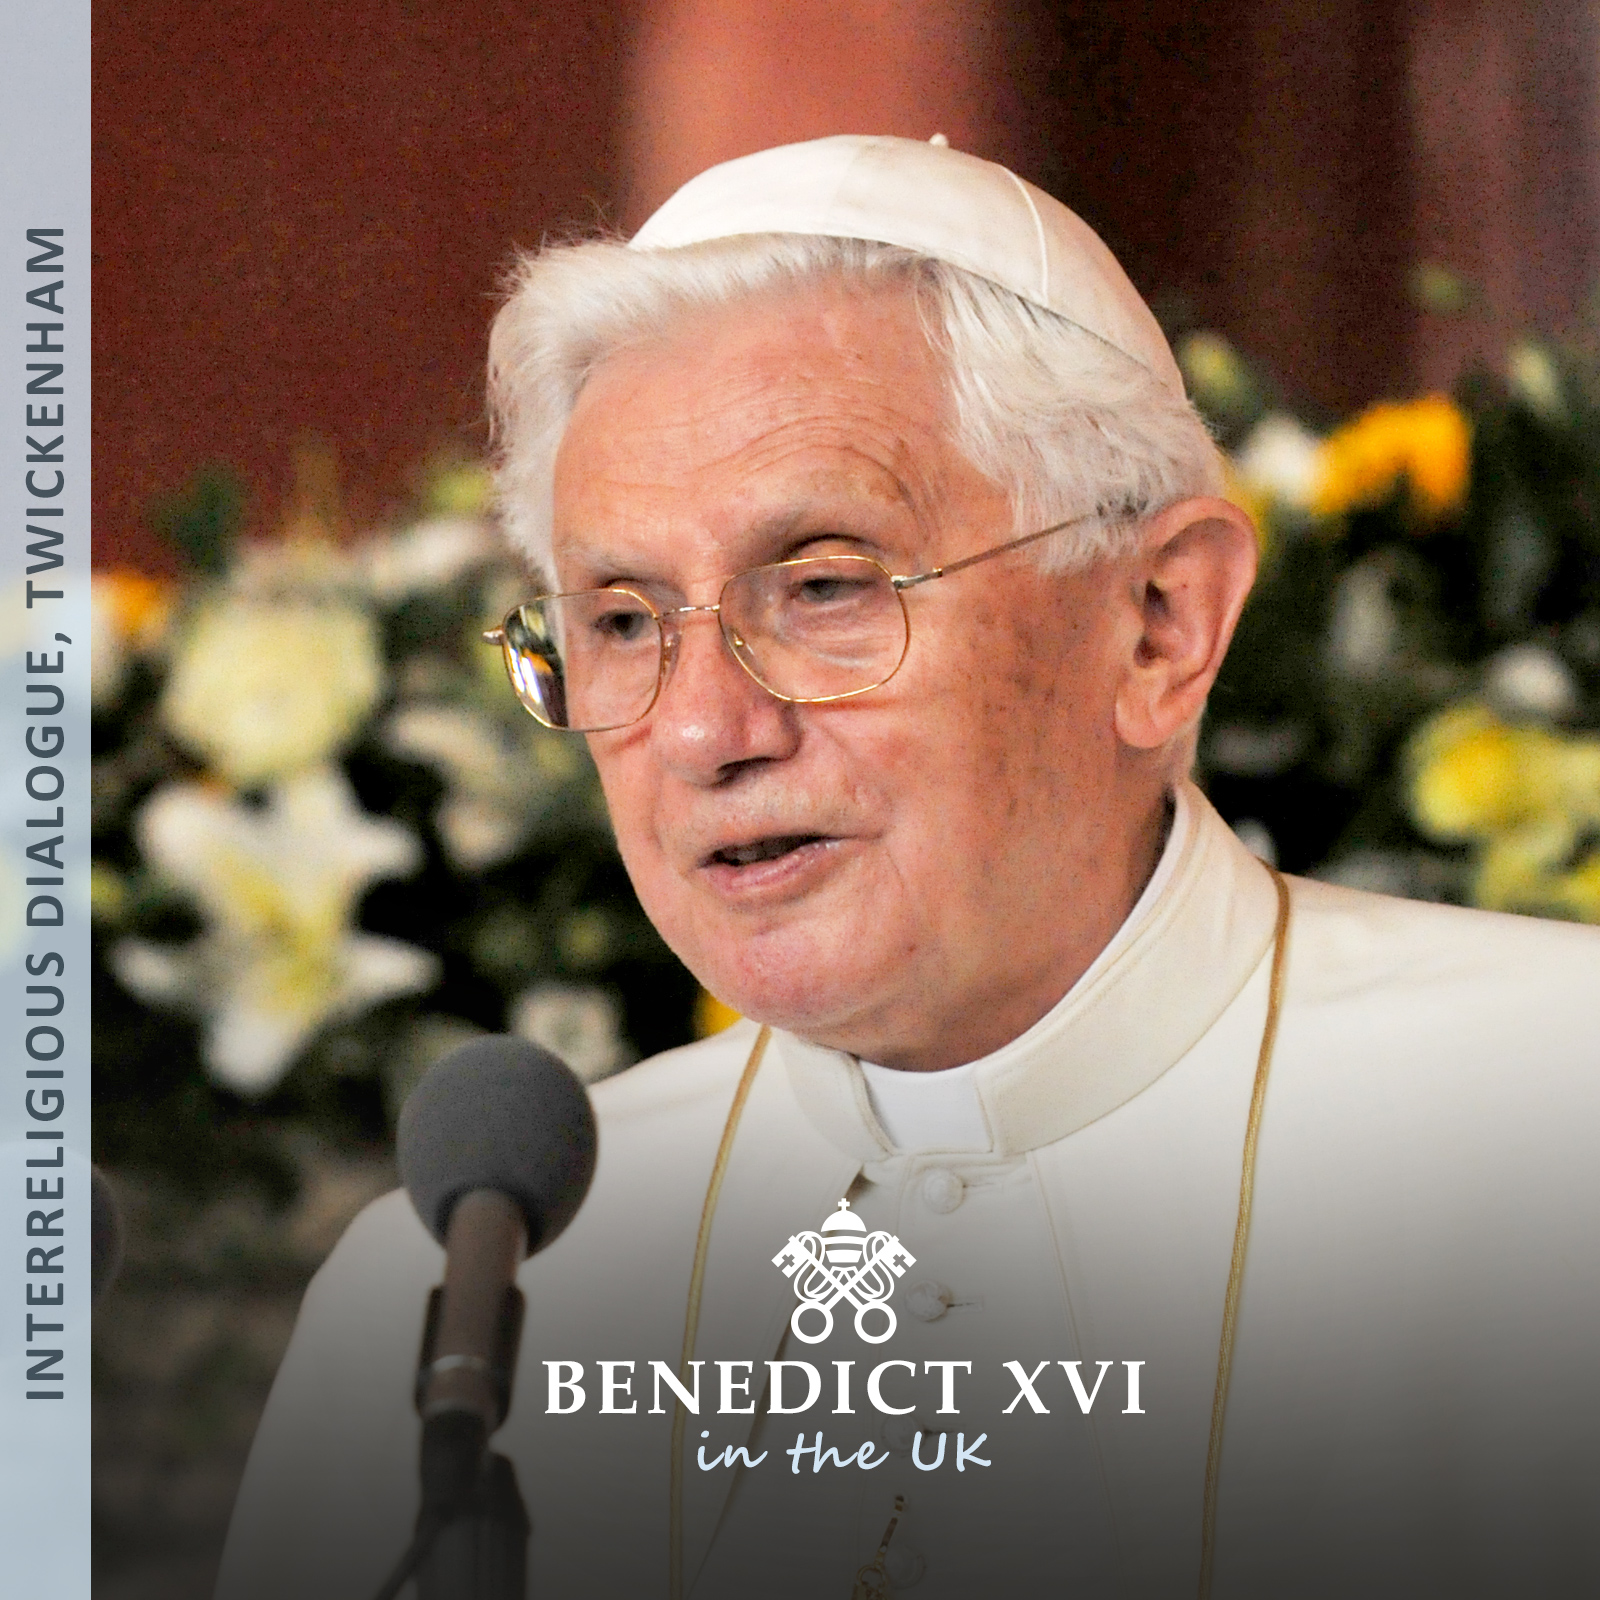 Benedict XVI addresses representatives of other religions